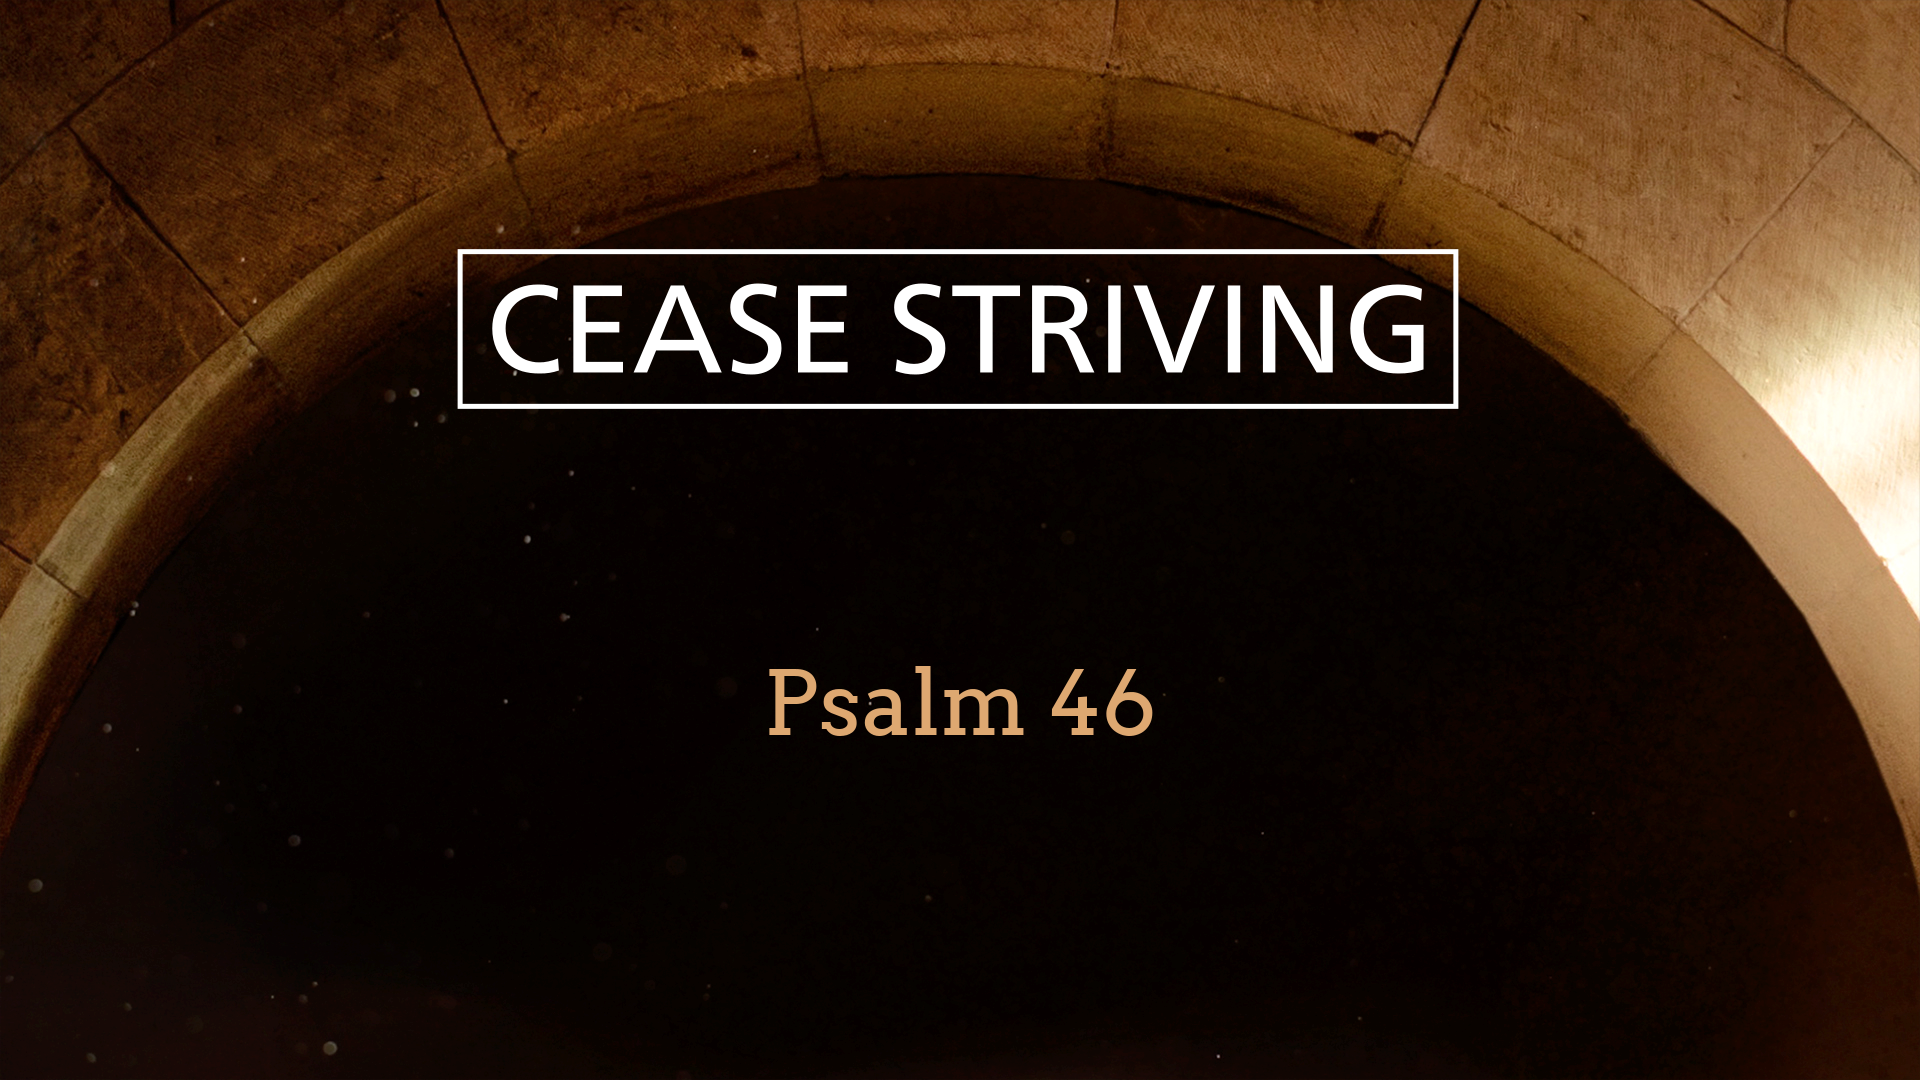 Apr 26, 2020 - Cease Striving (Video)